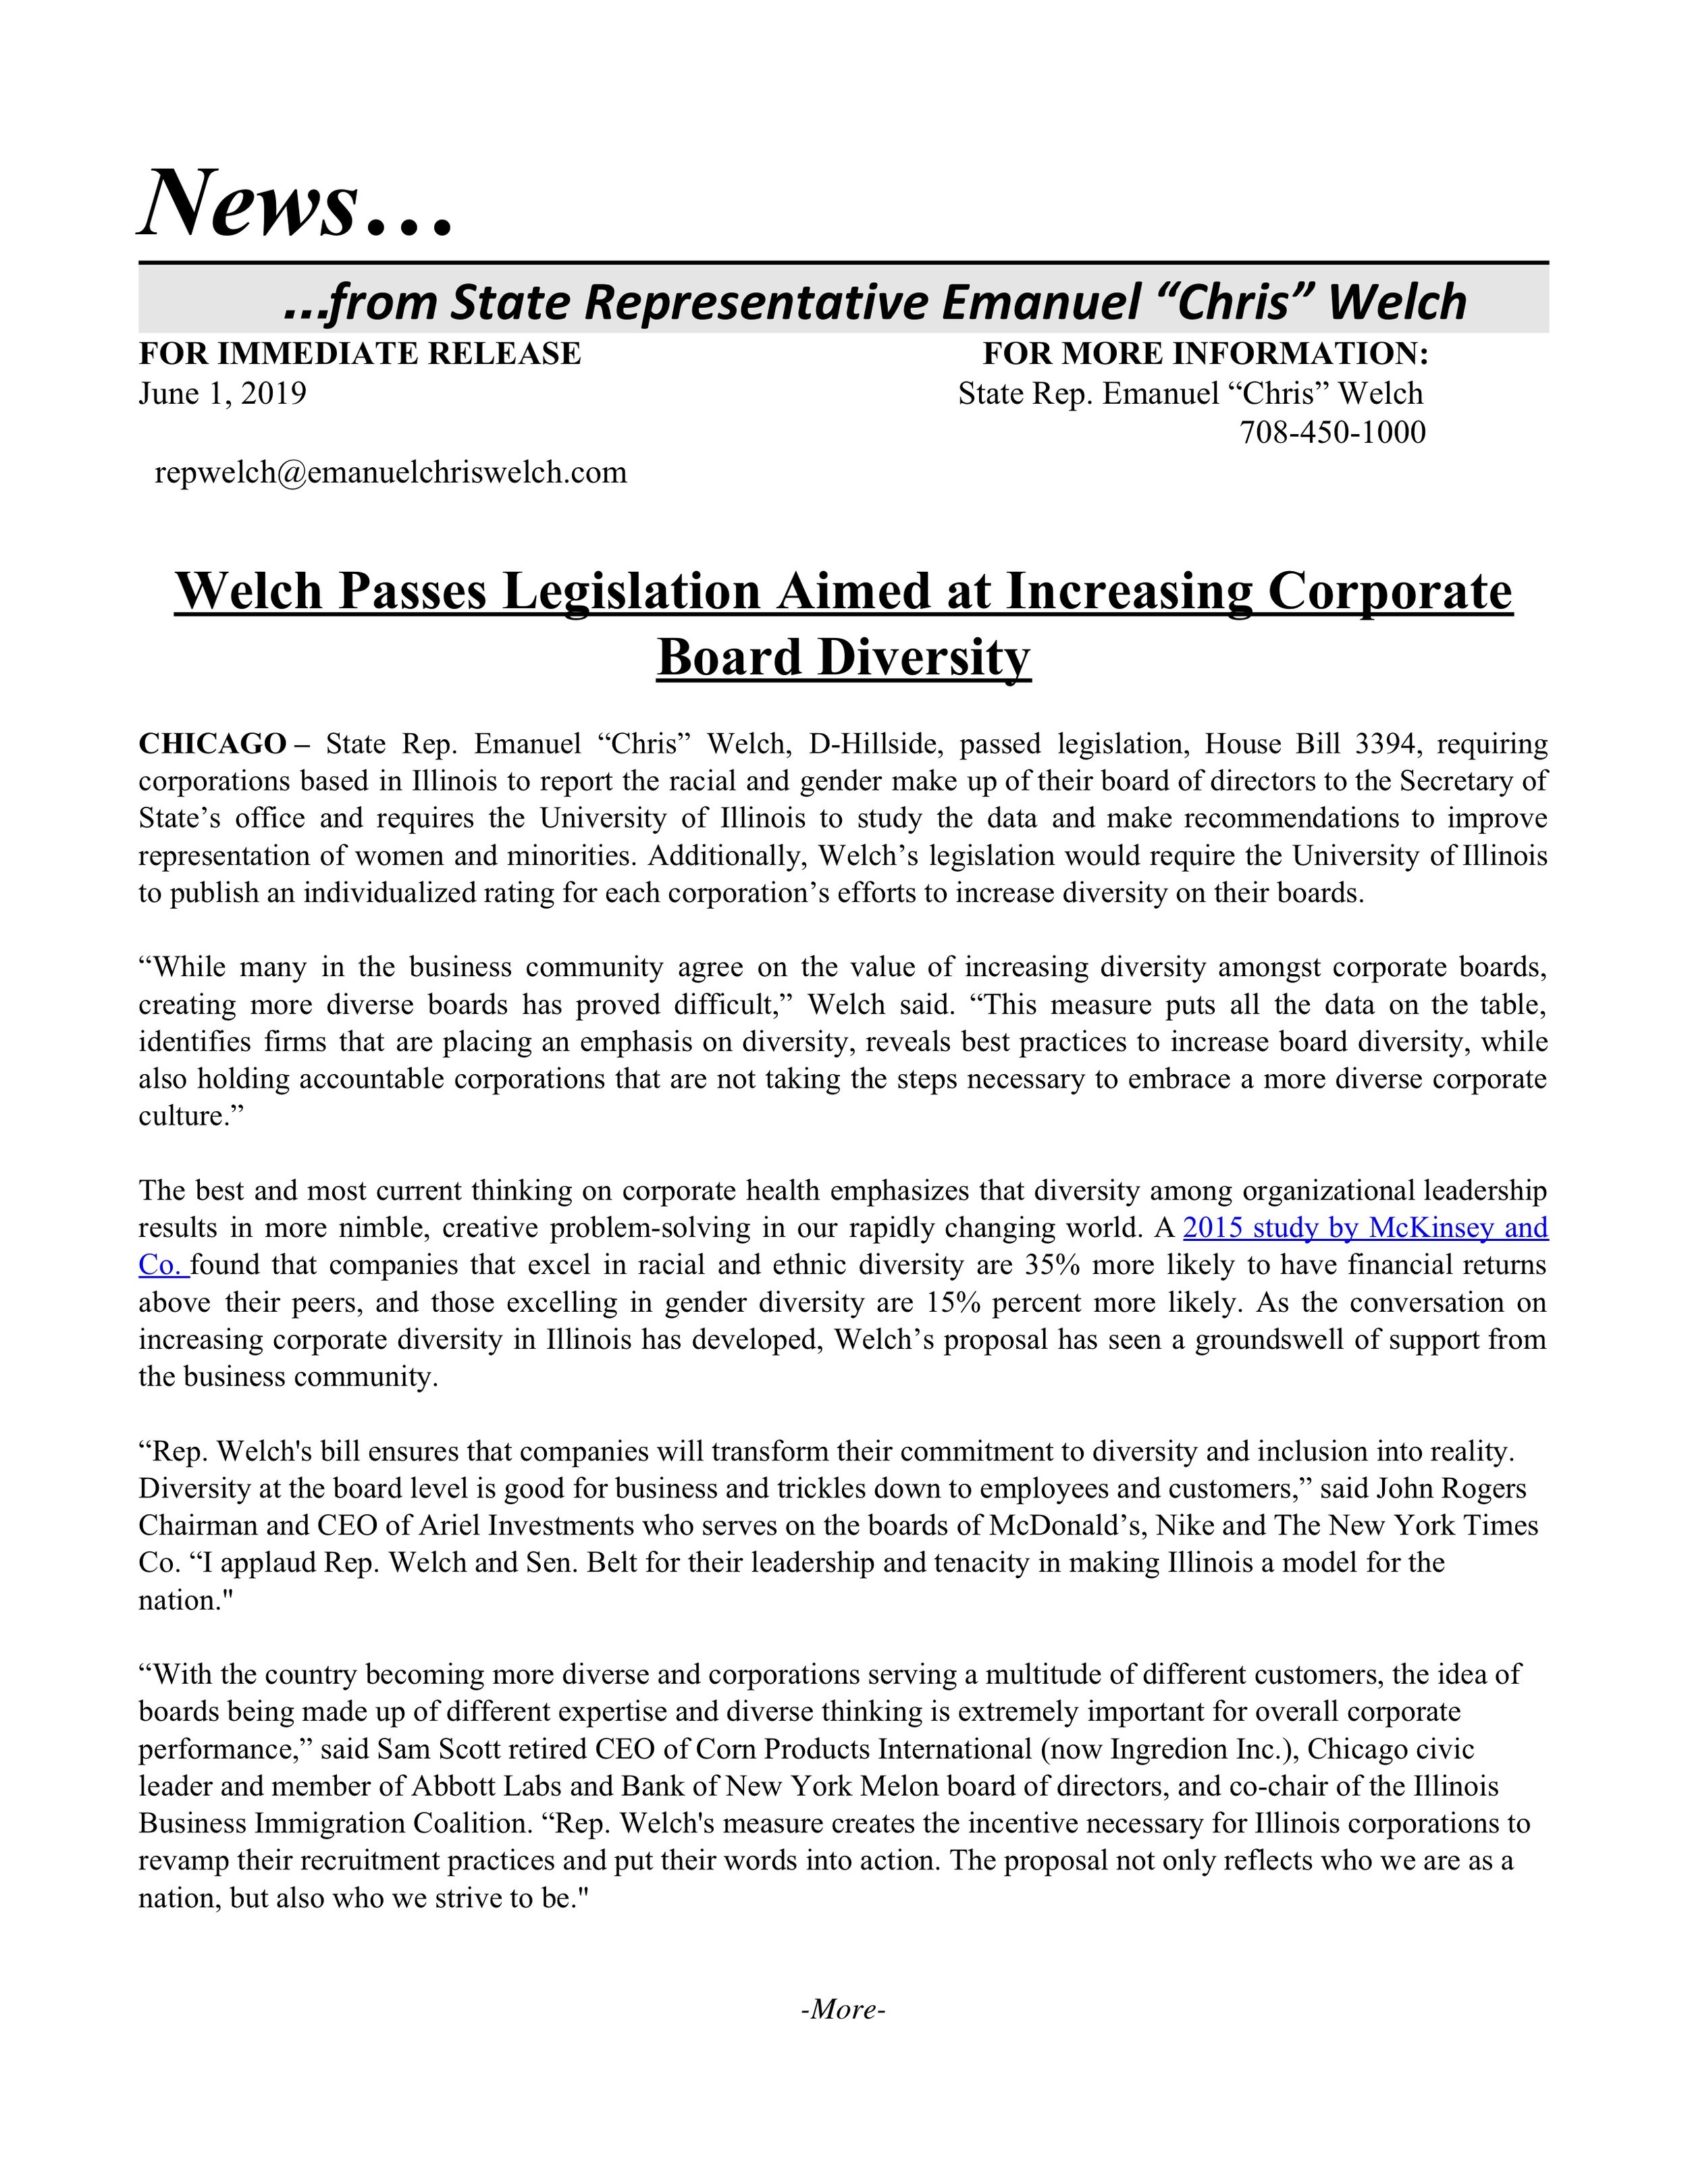 Welch Passes Legislation Aimed at Increasing Corporate Board Diversity (Copy)